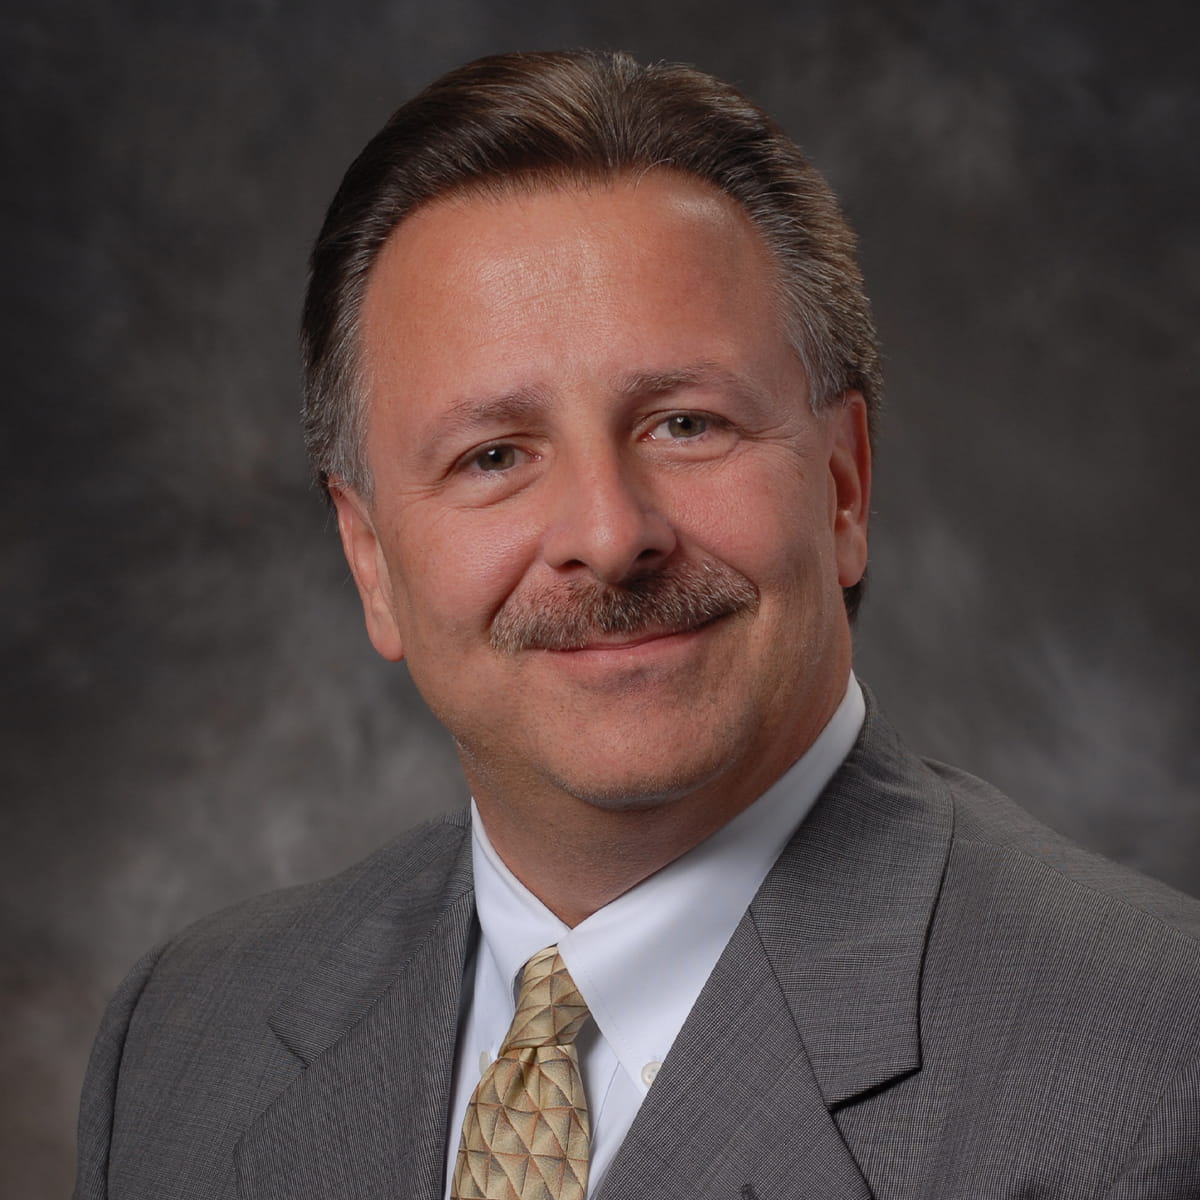 Jim Budzinski, Executive Vice President and Chief Financial Officer